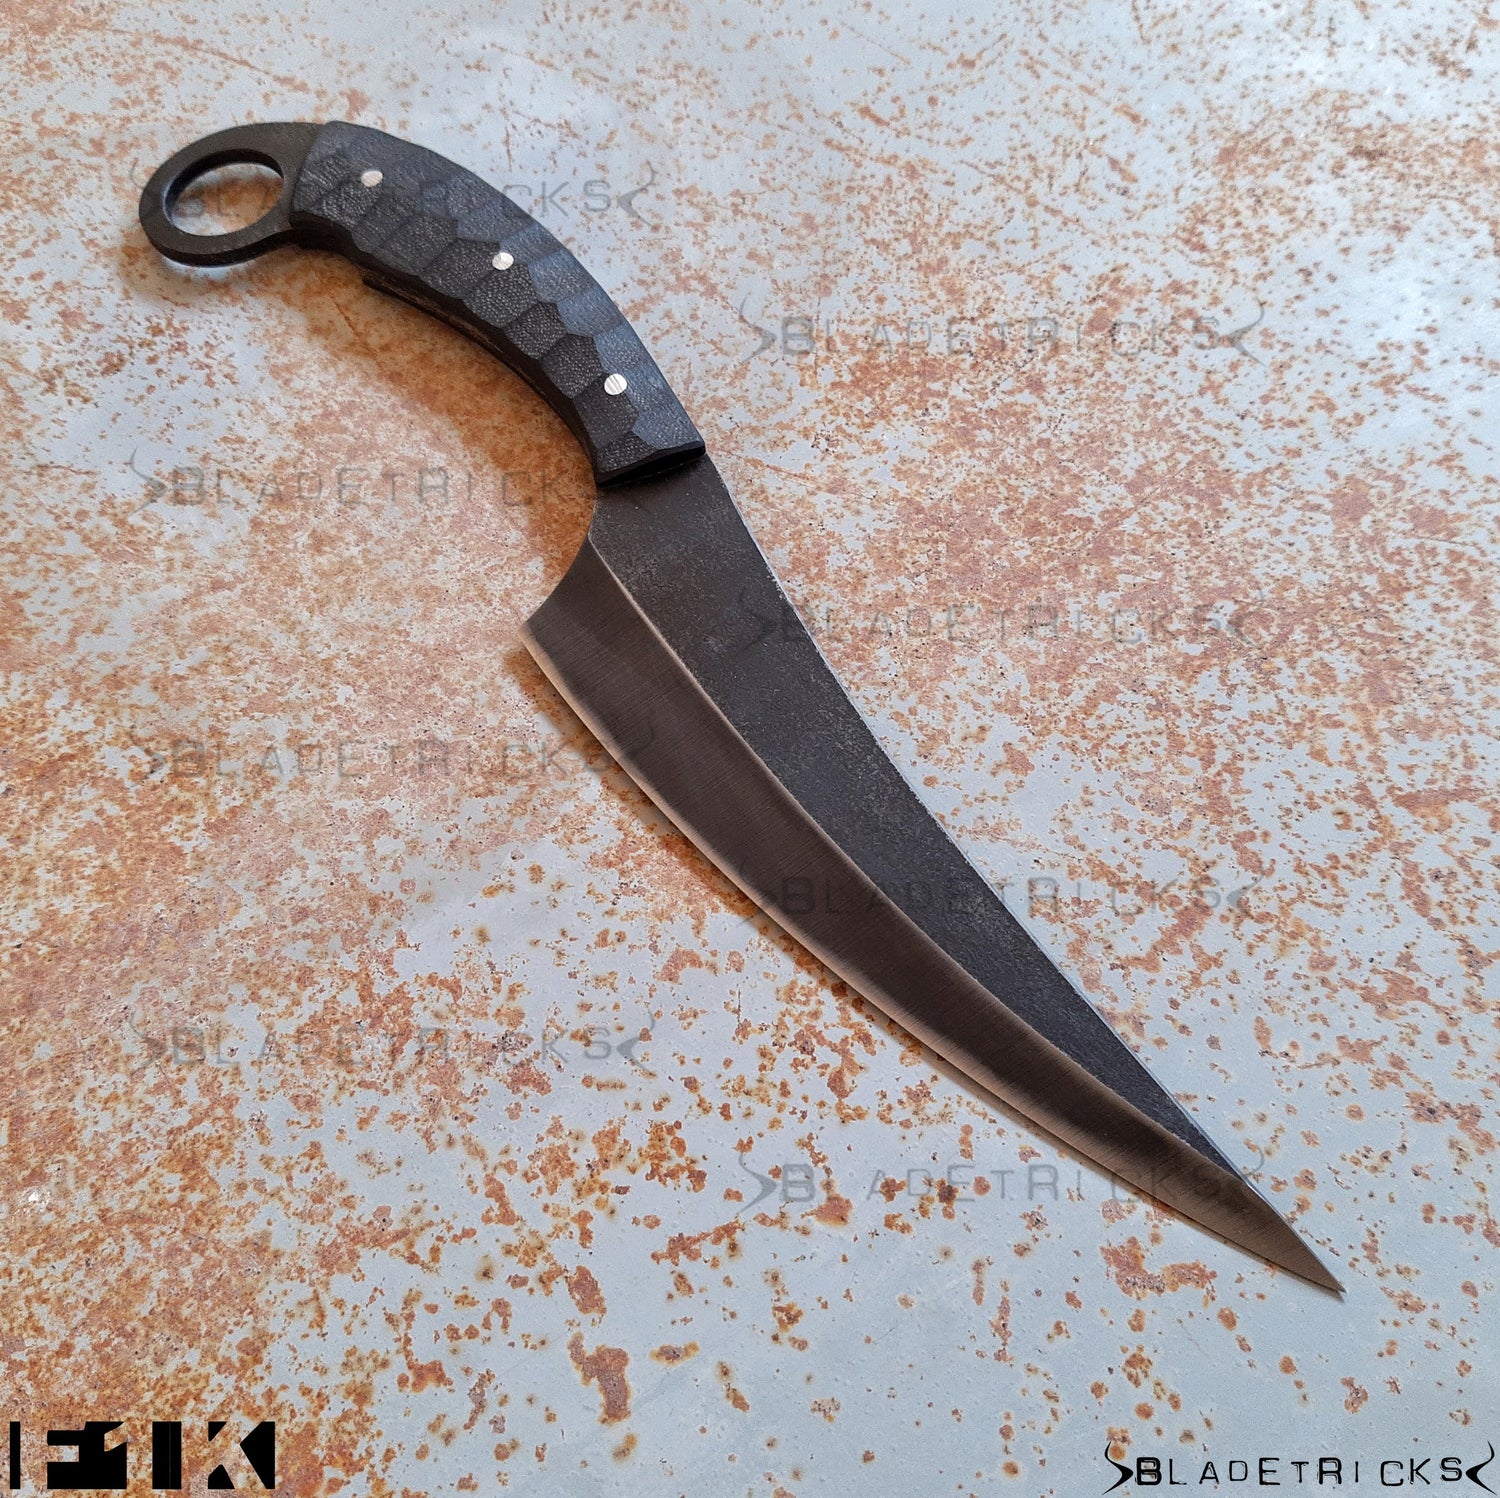 Persina style knife